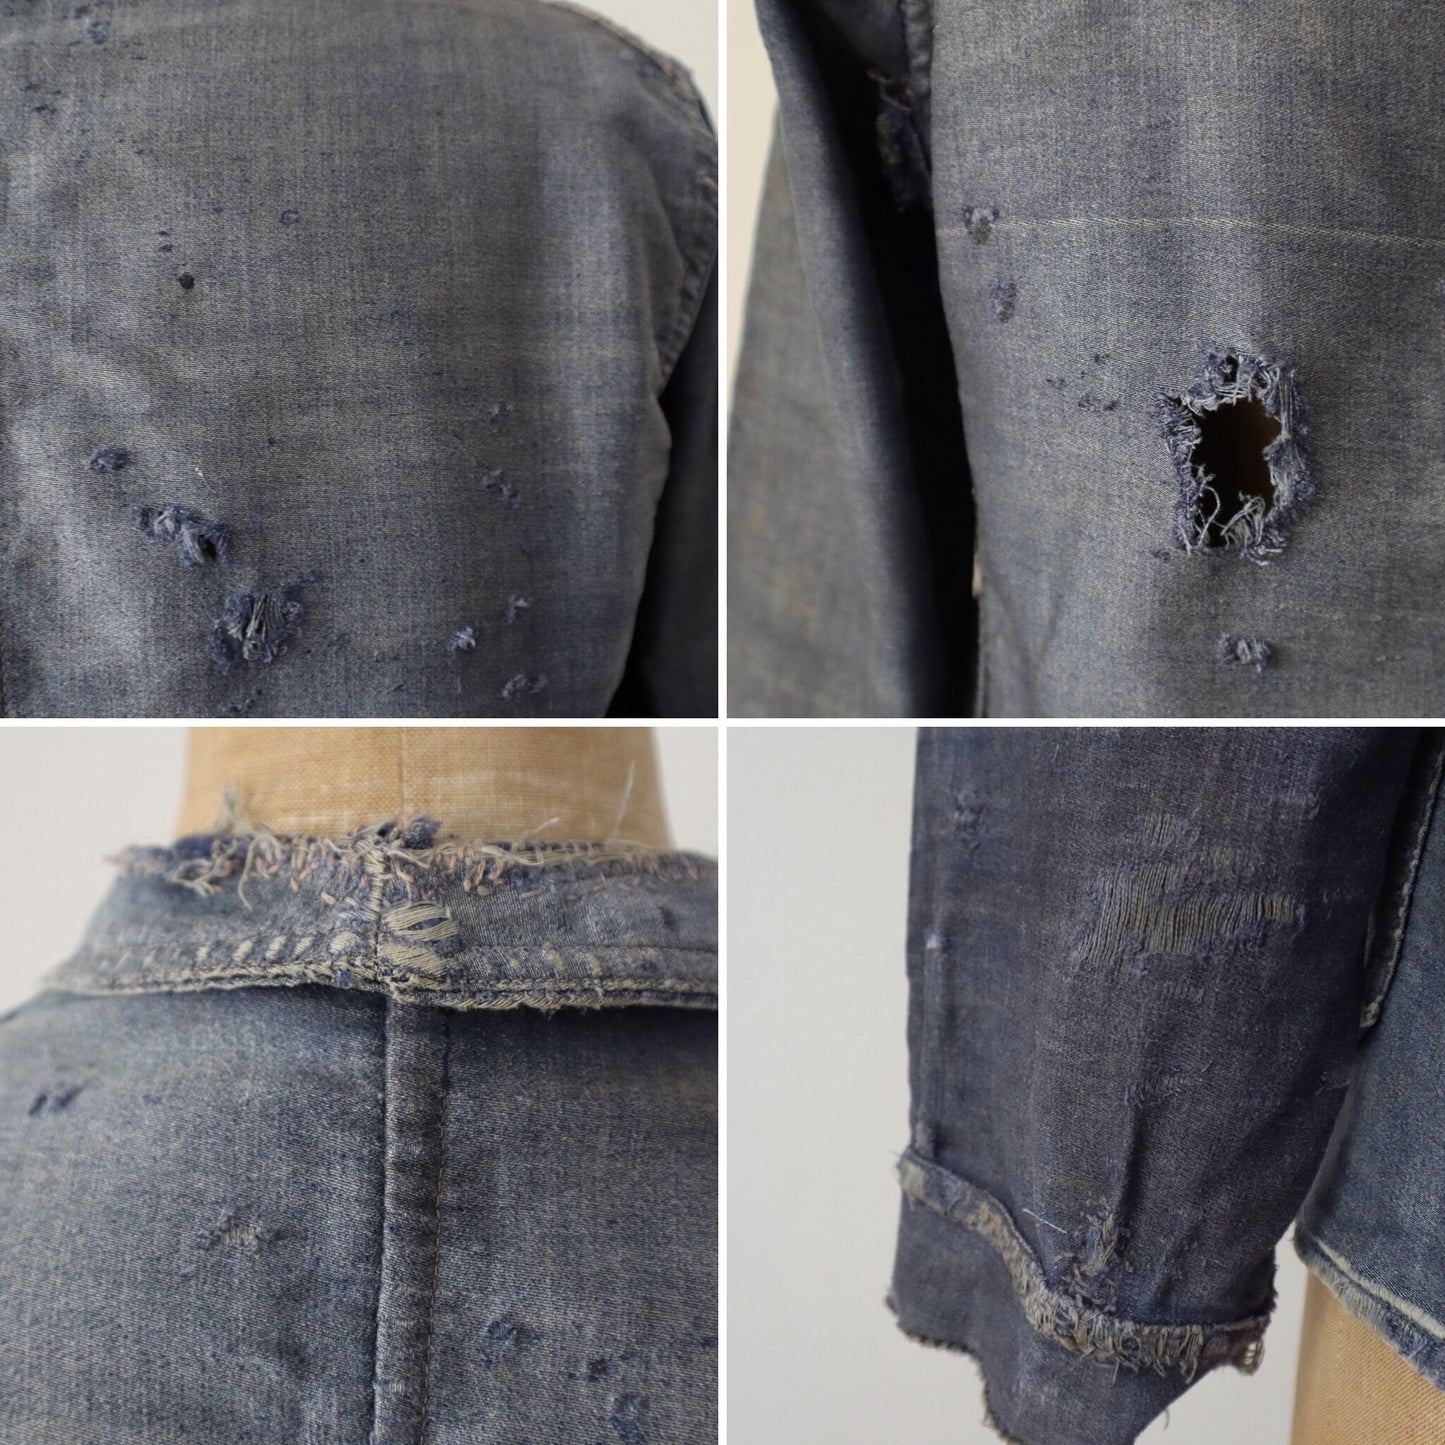 1920s - 30s French Blue Moleskin Jacket Relic Repairs Damage Chore Workwear